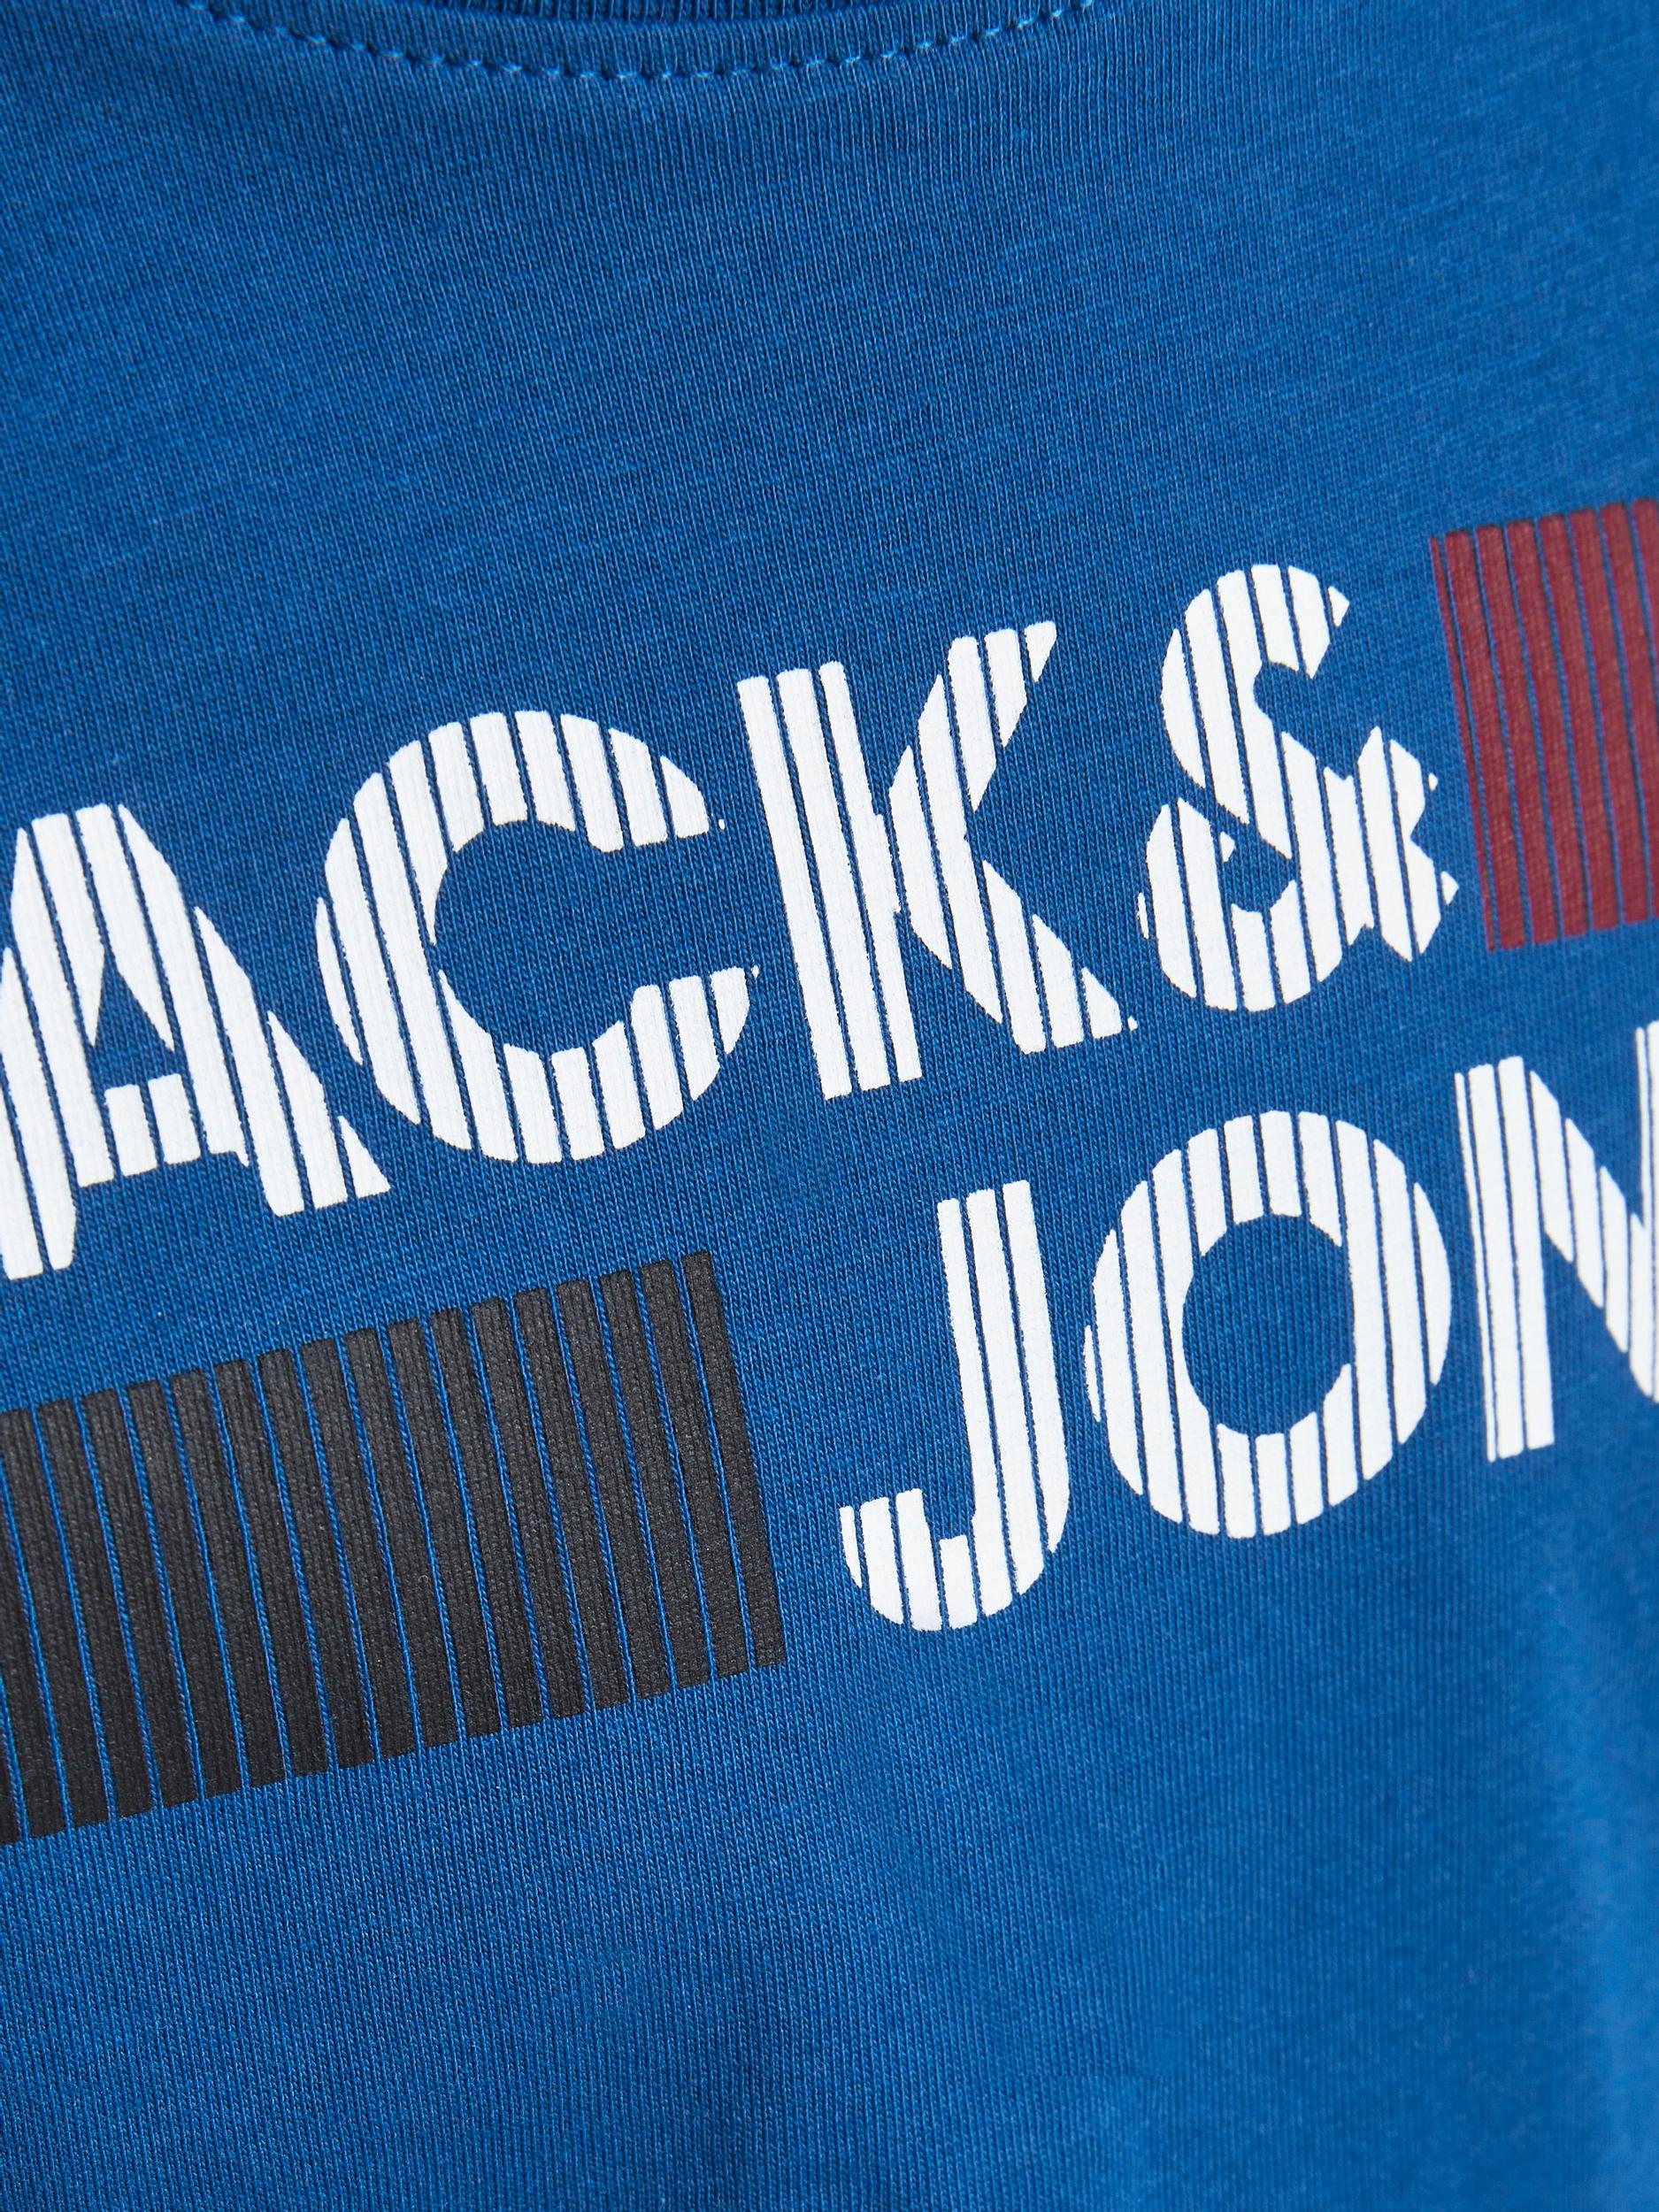 dGHSL Bambini Jack & Jones Junior Maglietta in Blu Reale 